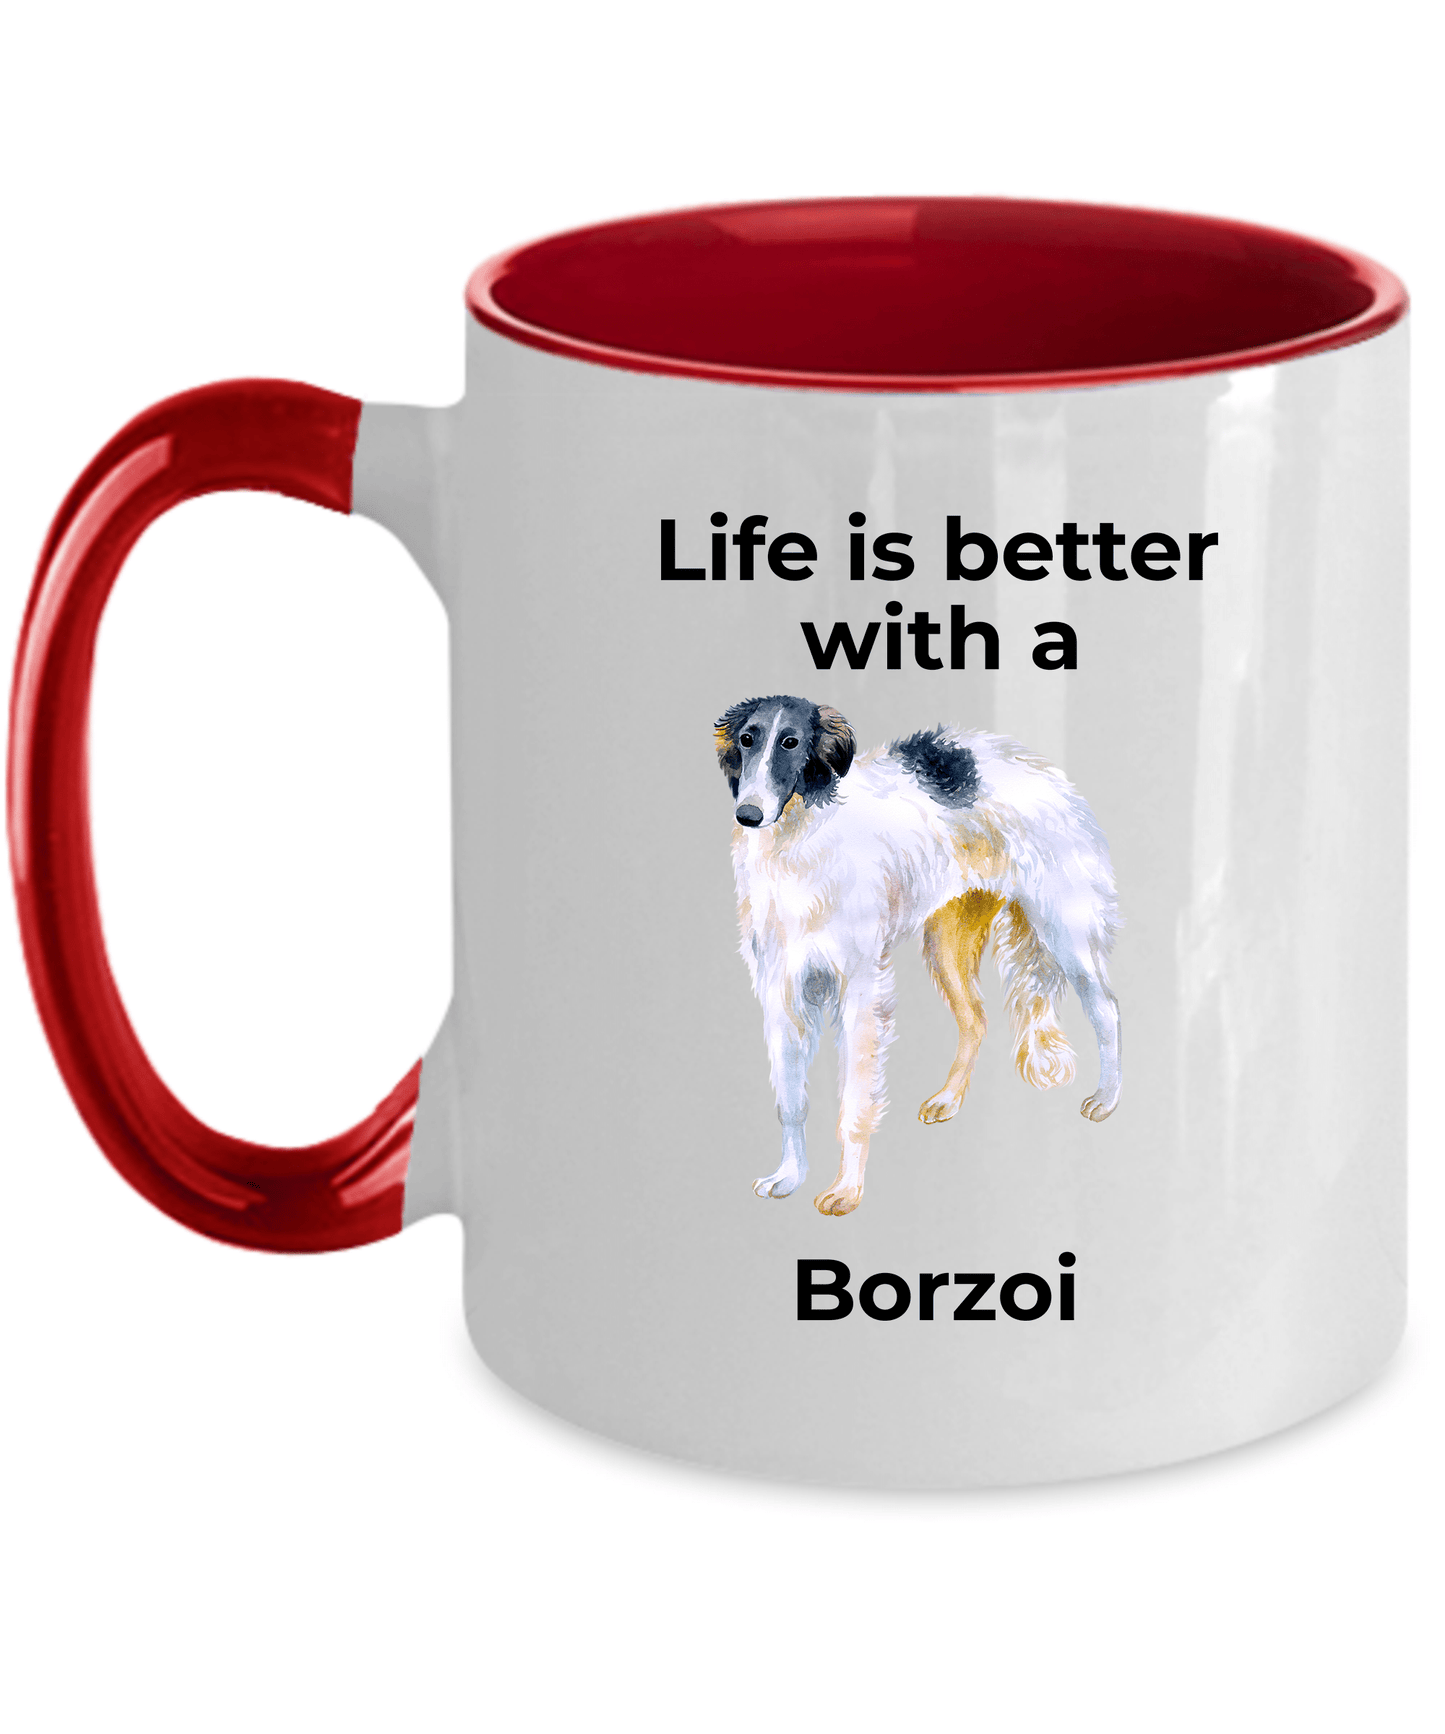 Borzoi Coffee Mug - Life is Better